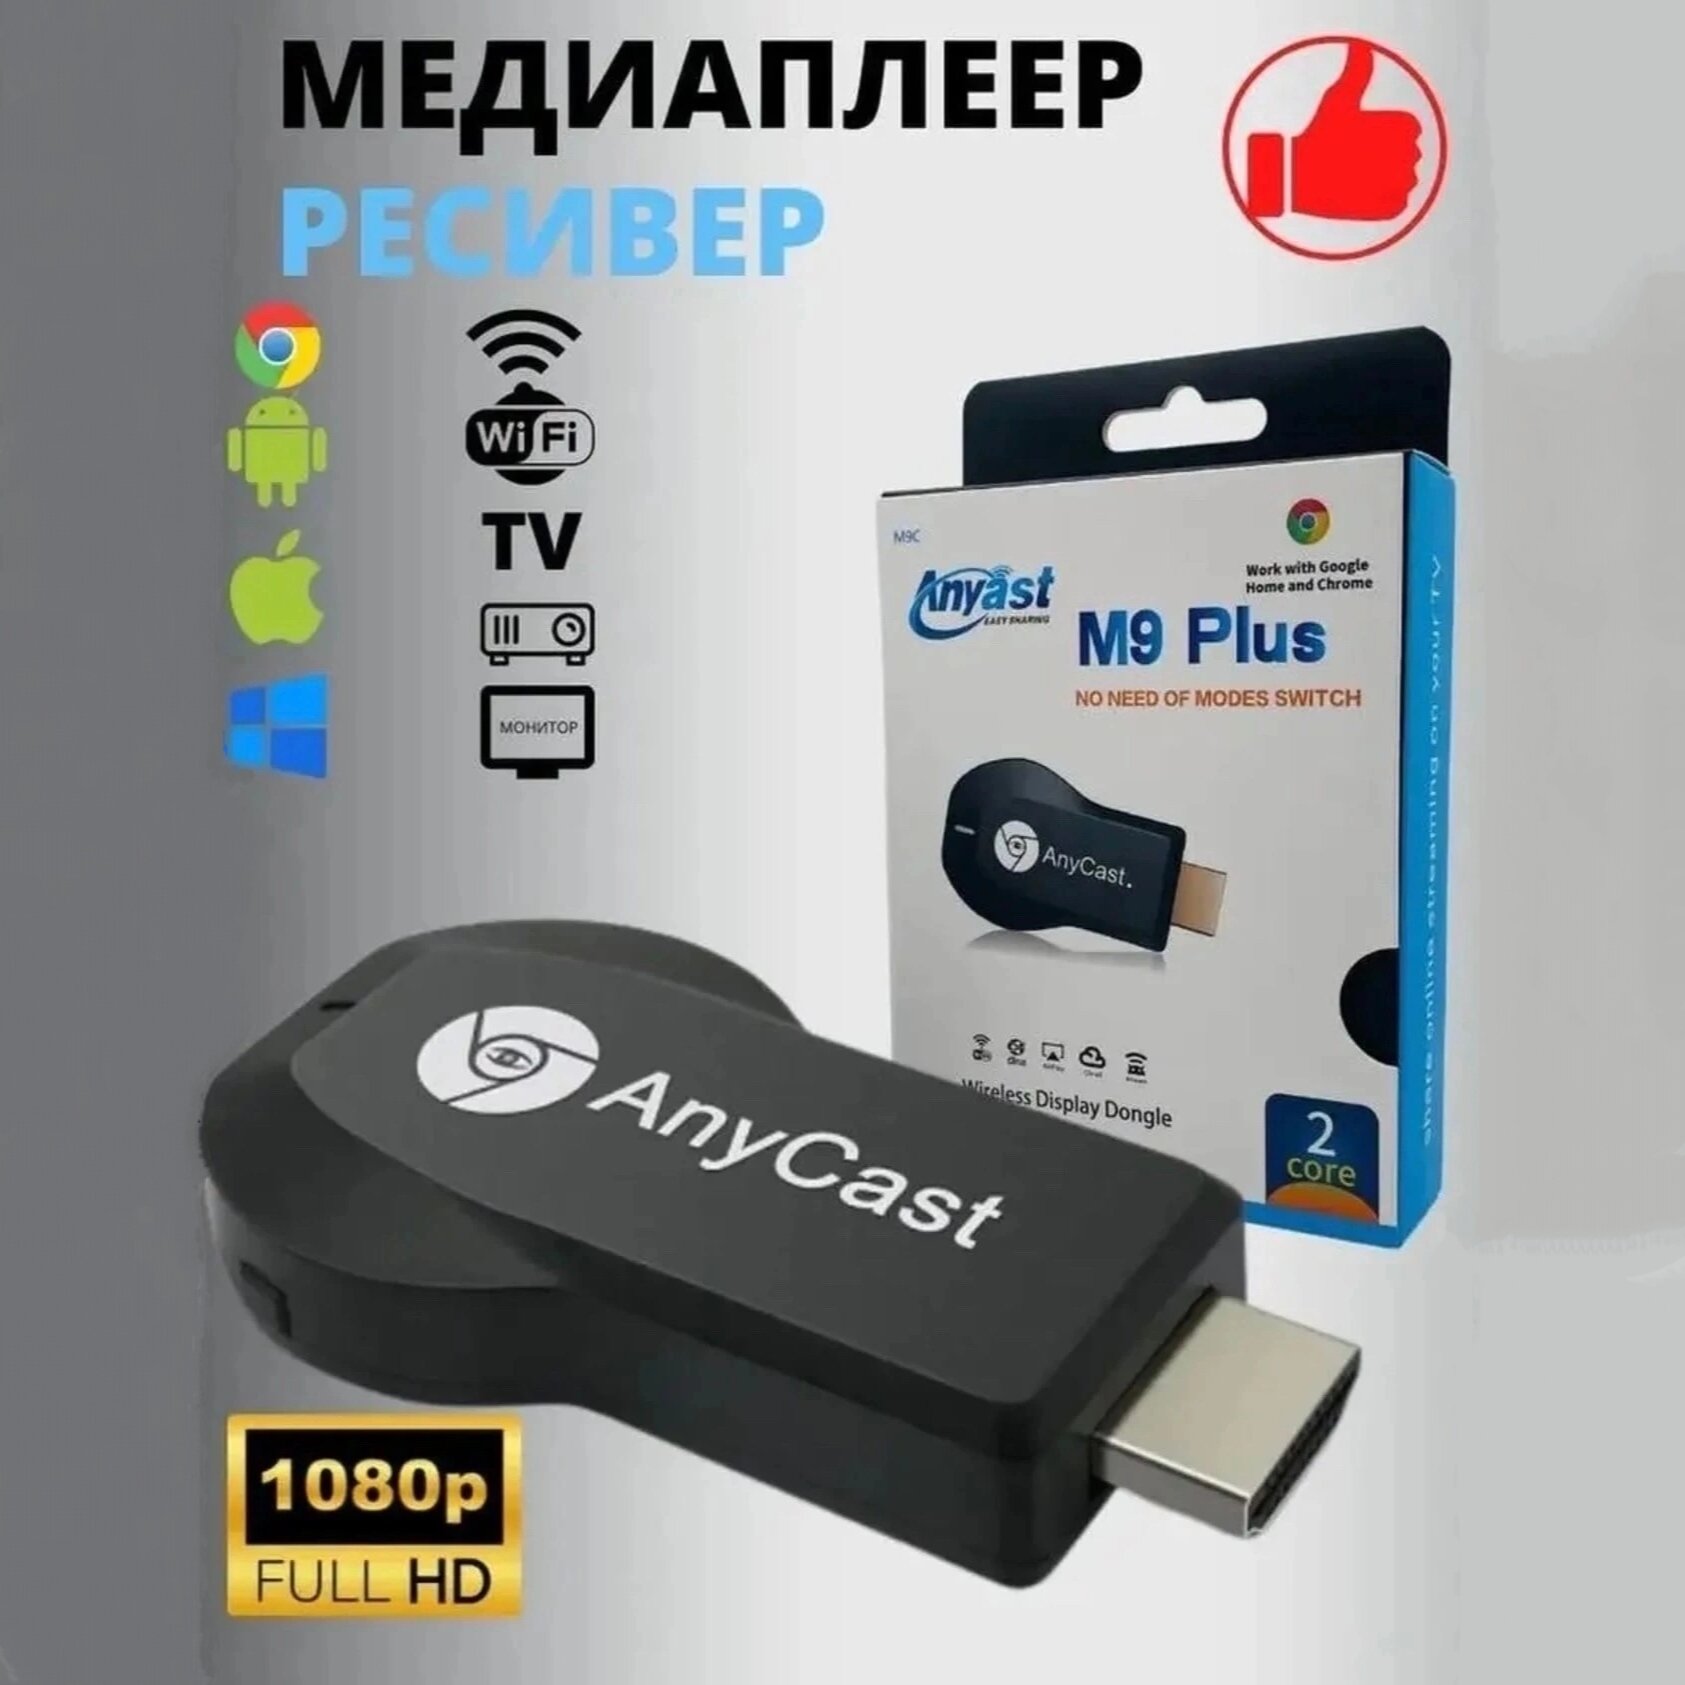 Медиаплеер ресивер беспроводной ТВ адаптер "AnyCAST M9 Plus" Display Dongle WiFi HDMI 1080P